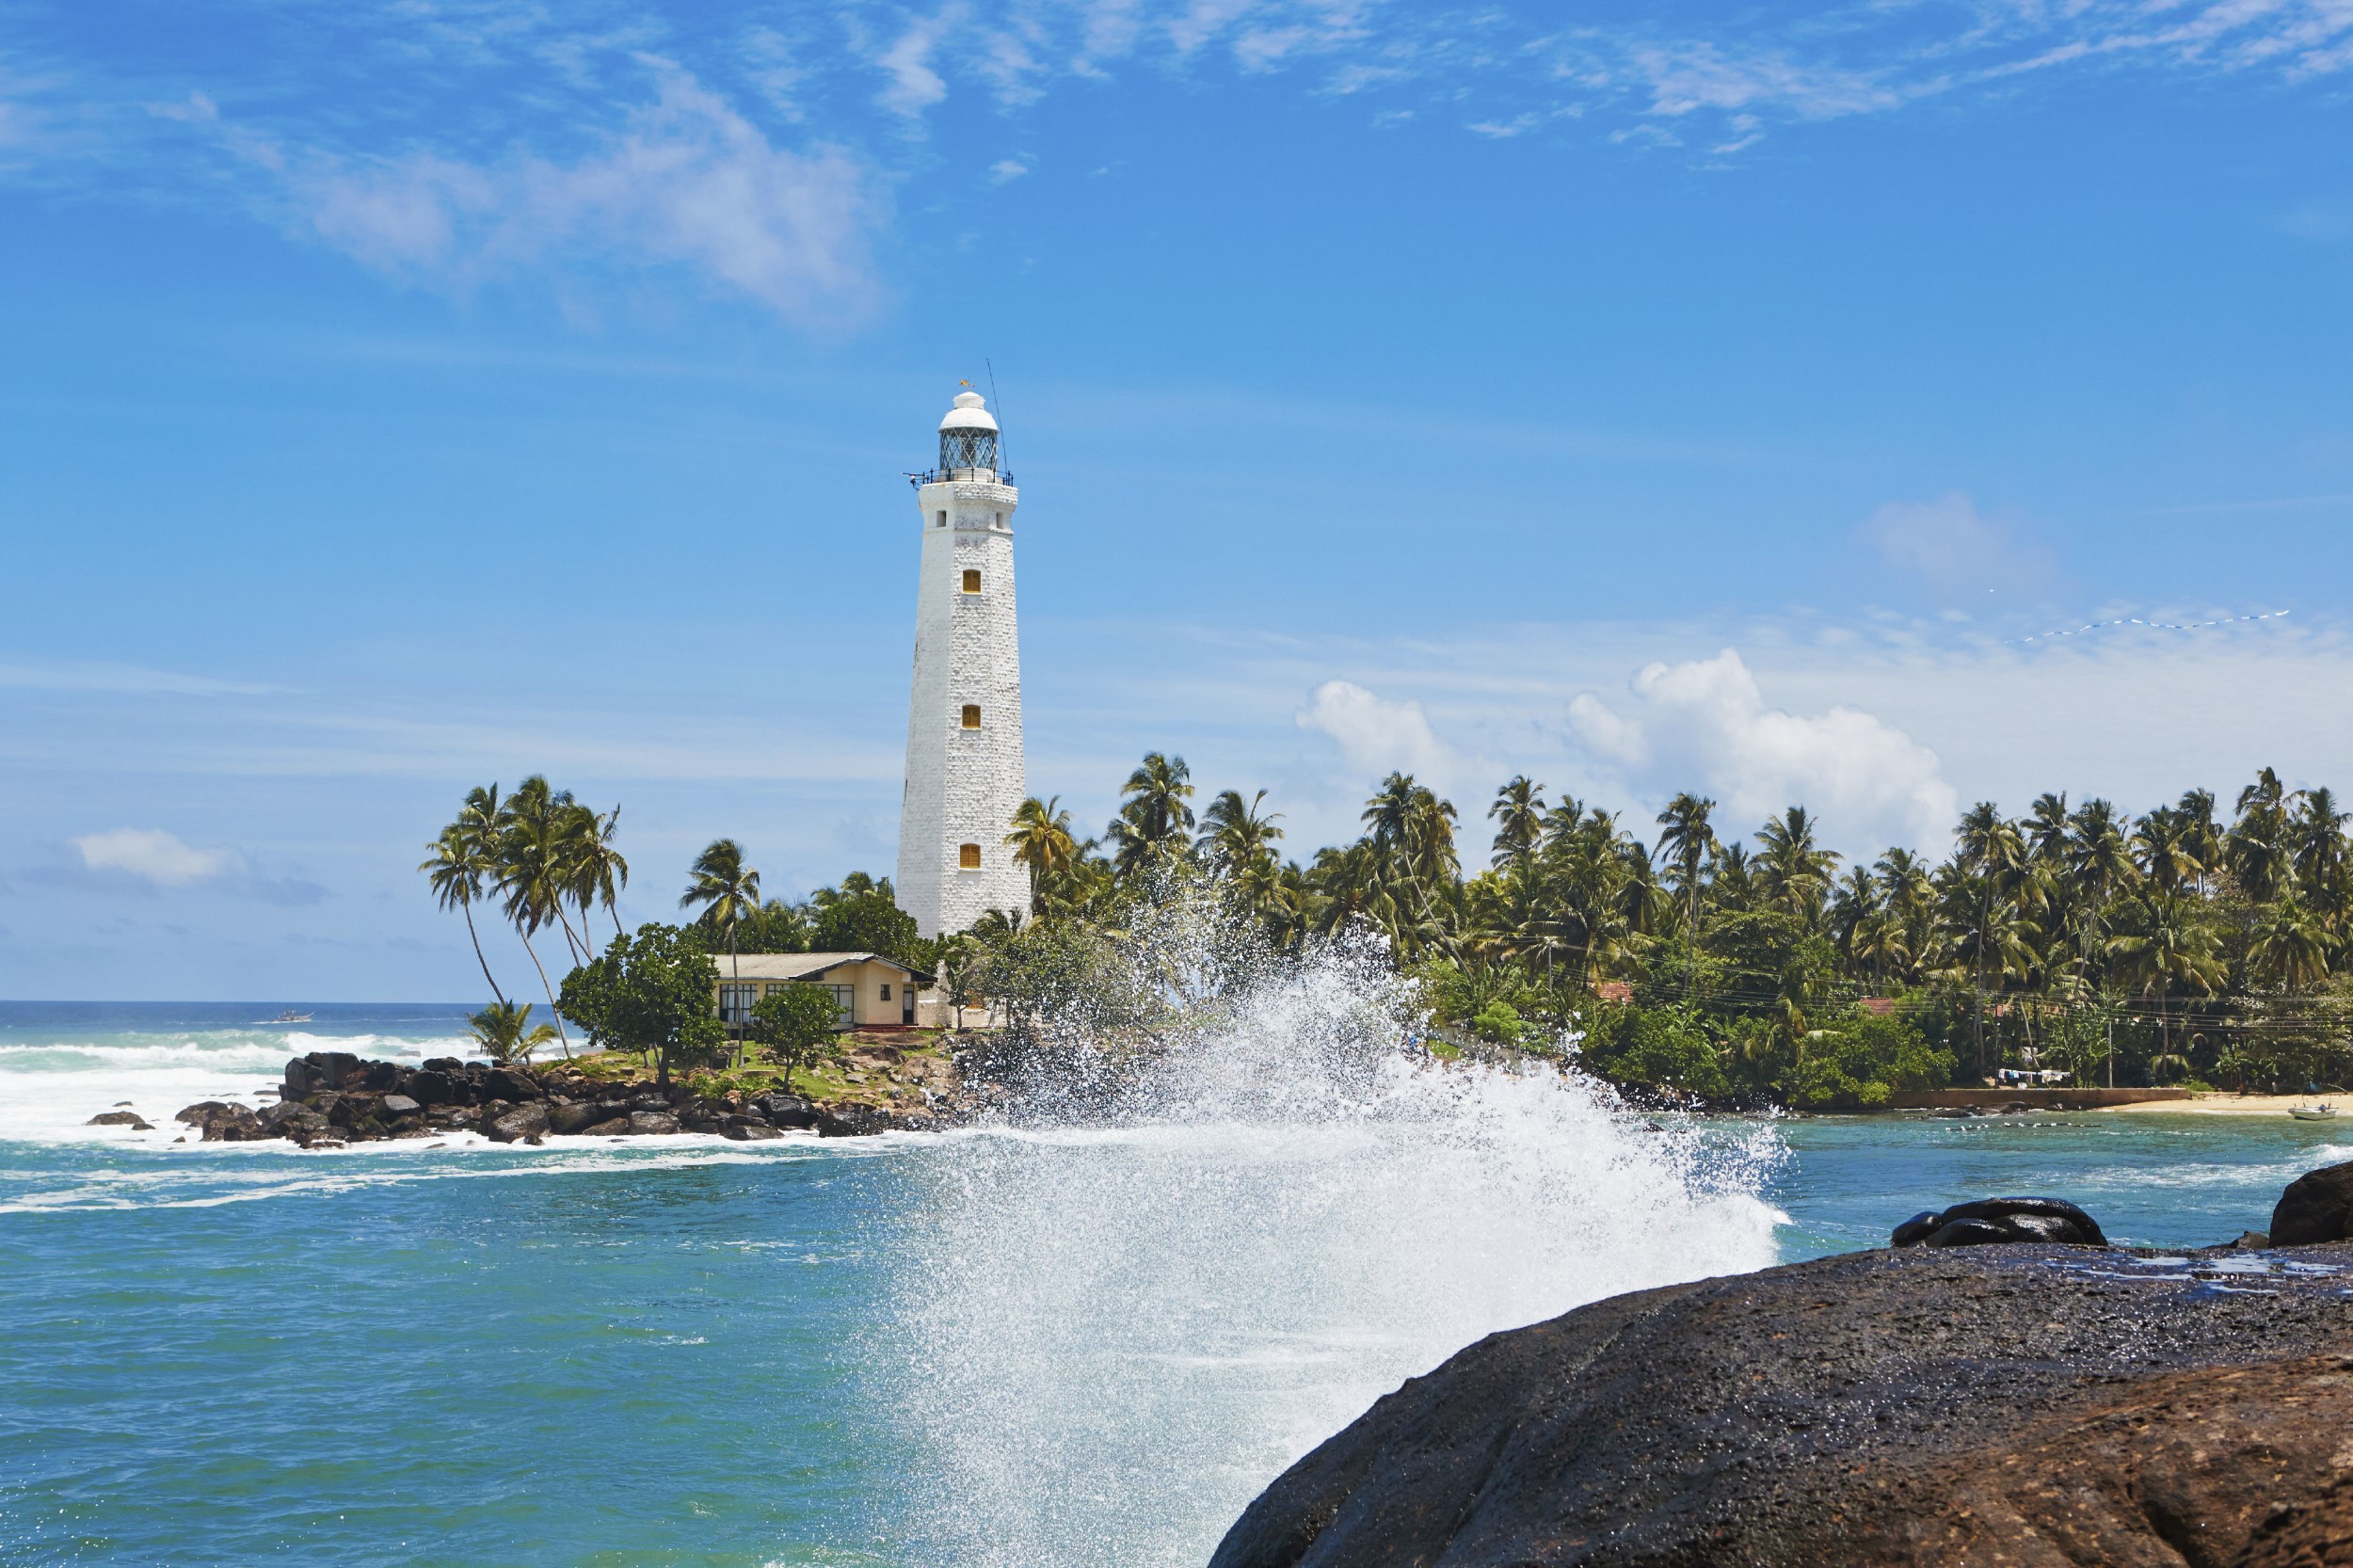 home Istock Sri Lanka algemeen vuurtoren algemeen strand beach mooi